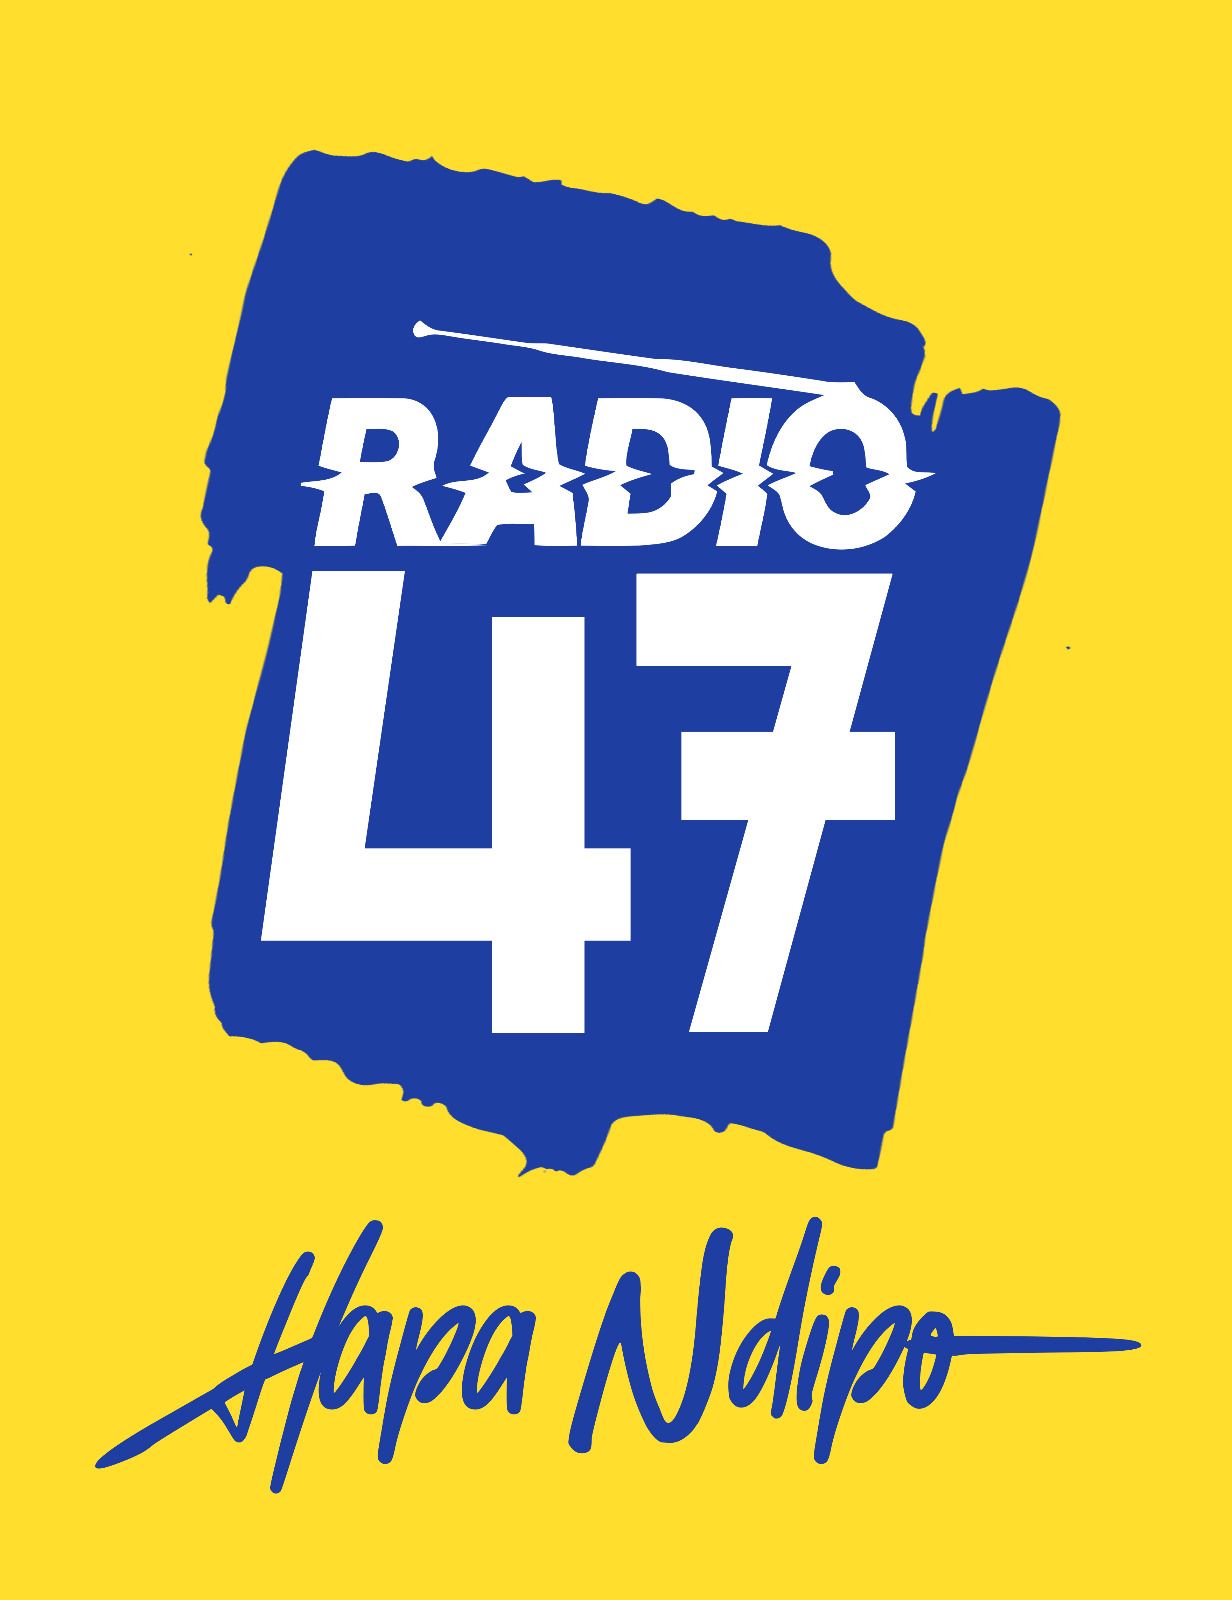 radio 47 logo